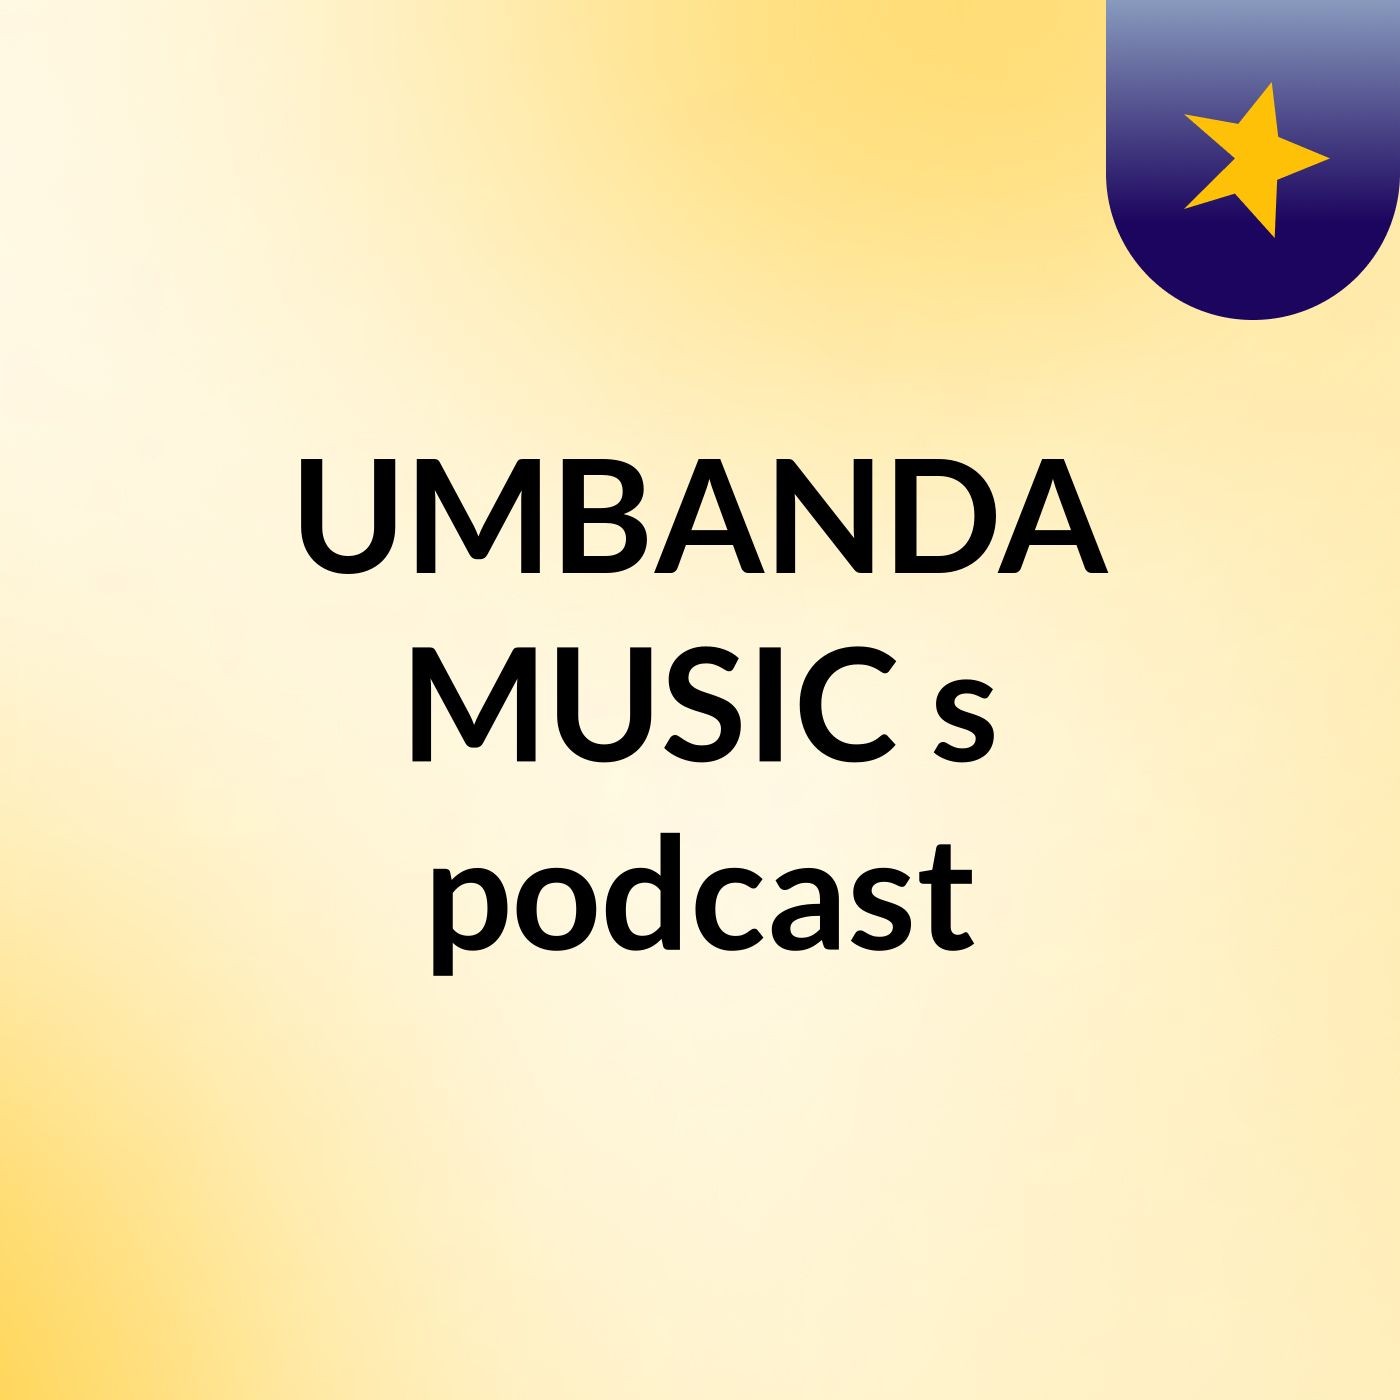 UMBANDA MUSIC's podcast